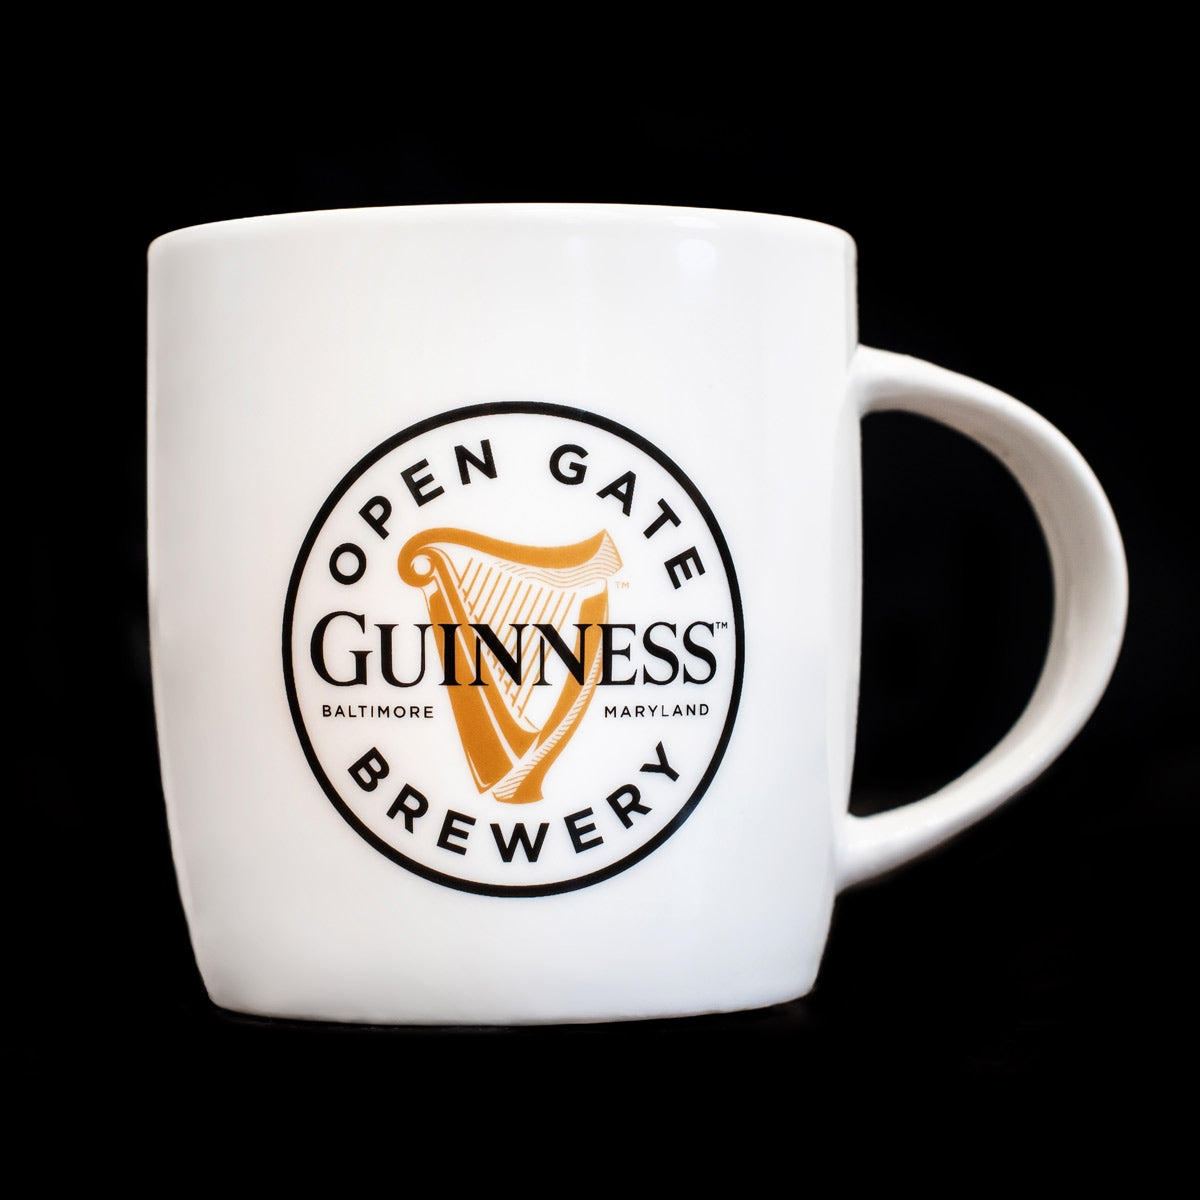 Official Guinness Open Gate Brewery White Ceramic Mug